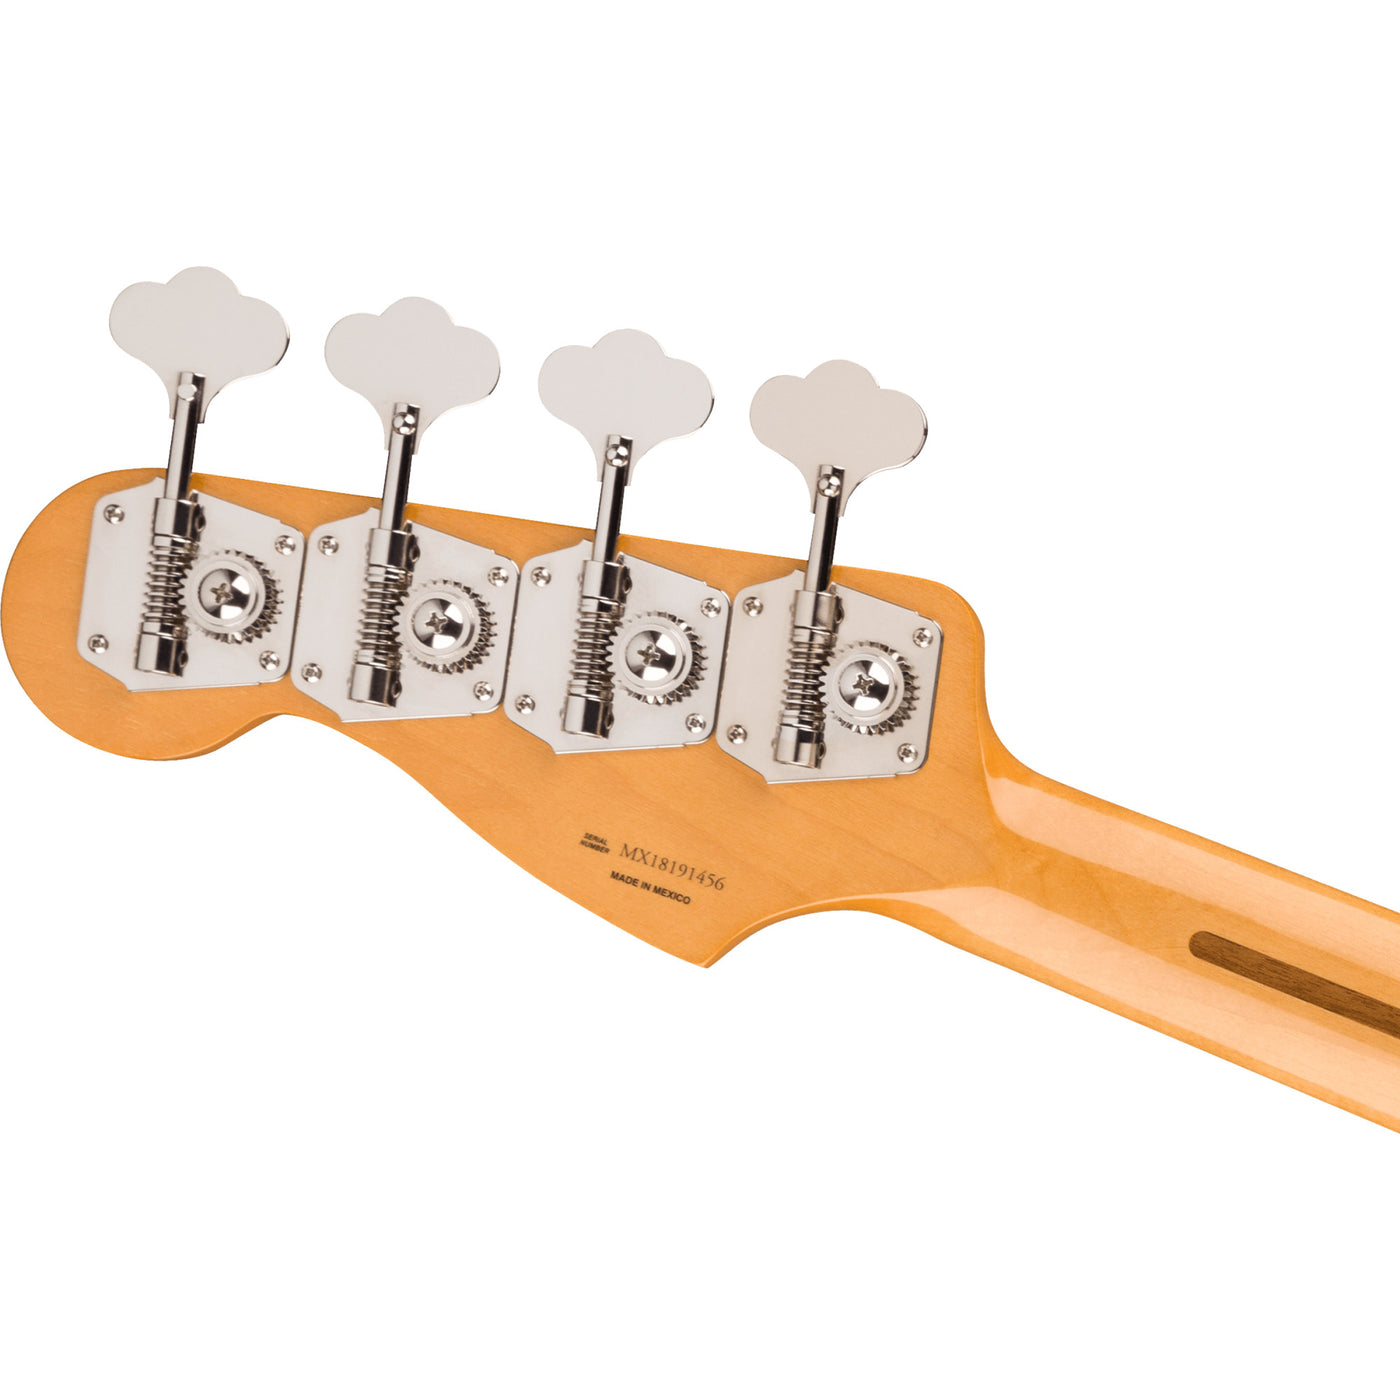 Fender Vintera '50s Precision Bass Guitar, Dakota Red (0149612354)